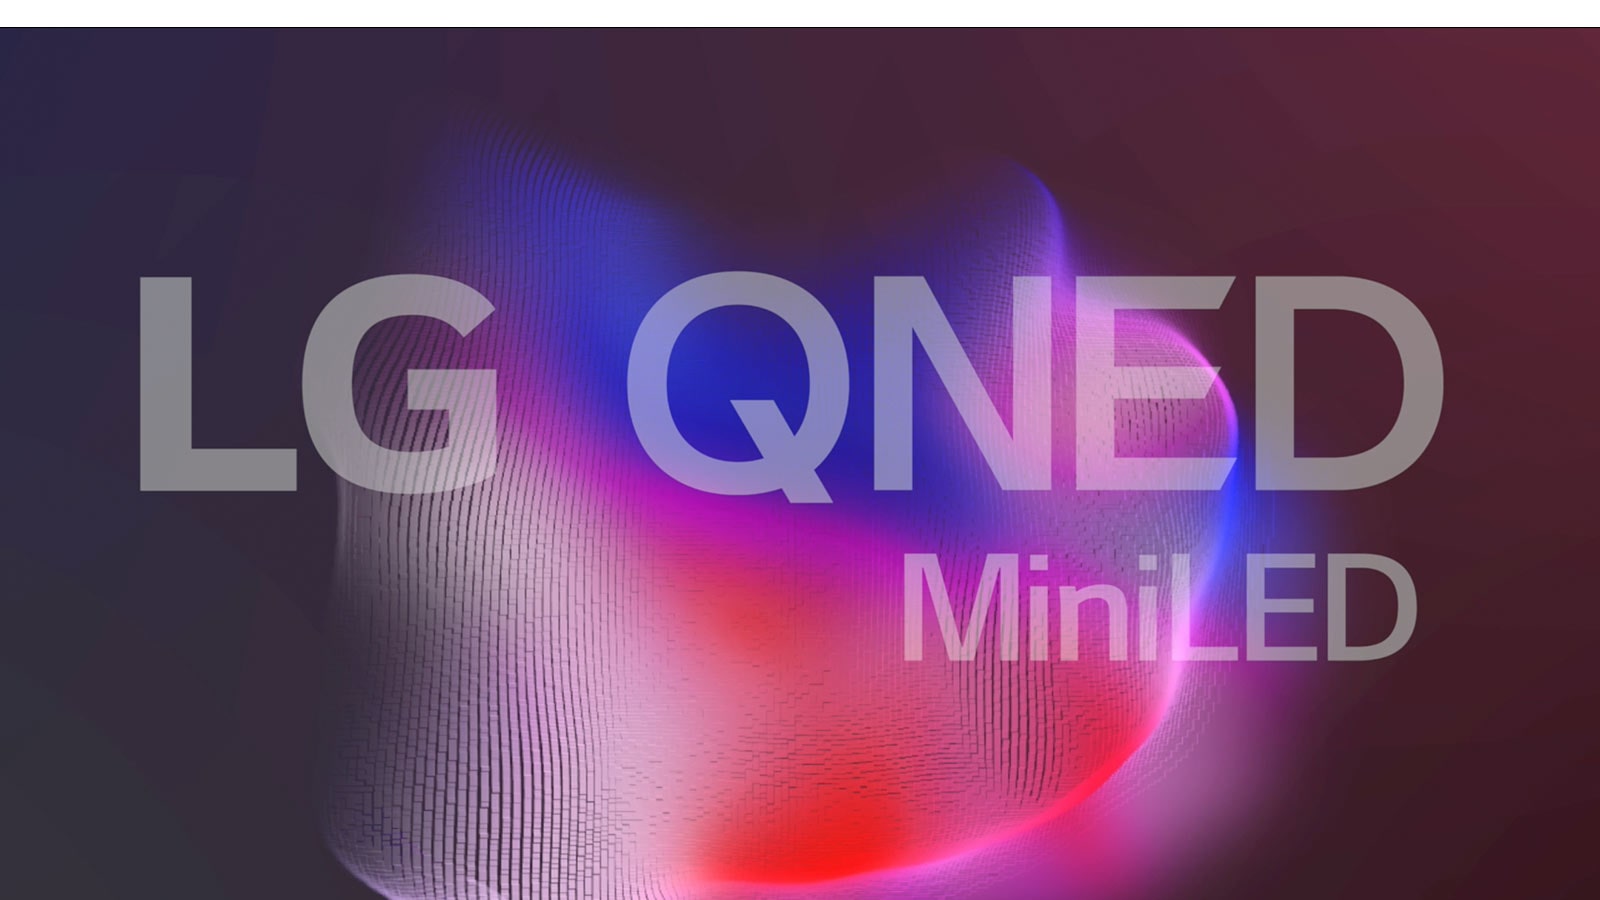 Экран телевизора с логотипом LG QNED Mini LED и маленькими яркими частицами, собирающимися в виде бойцовой рыбки (воспроизвести видео).